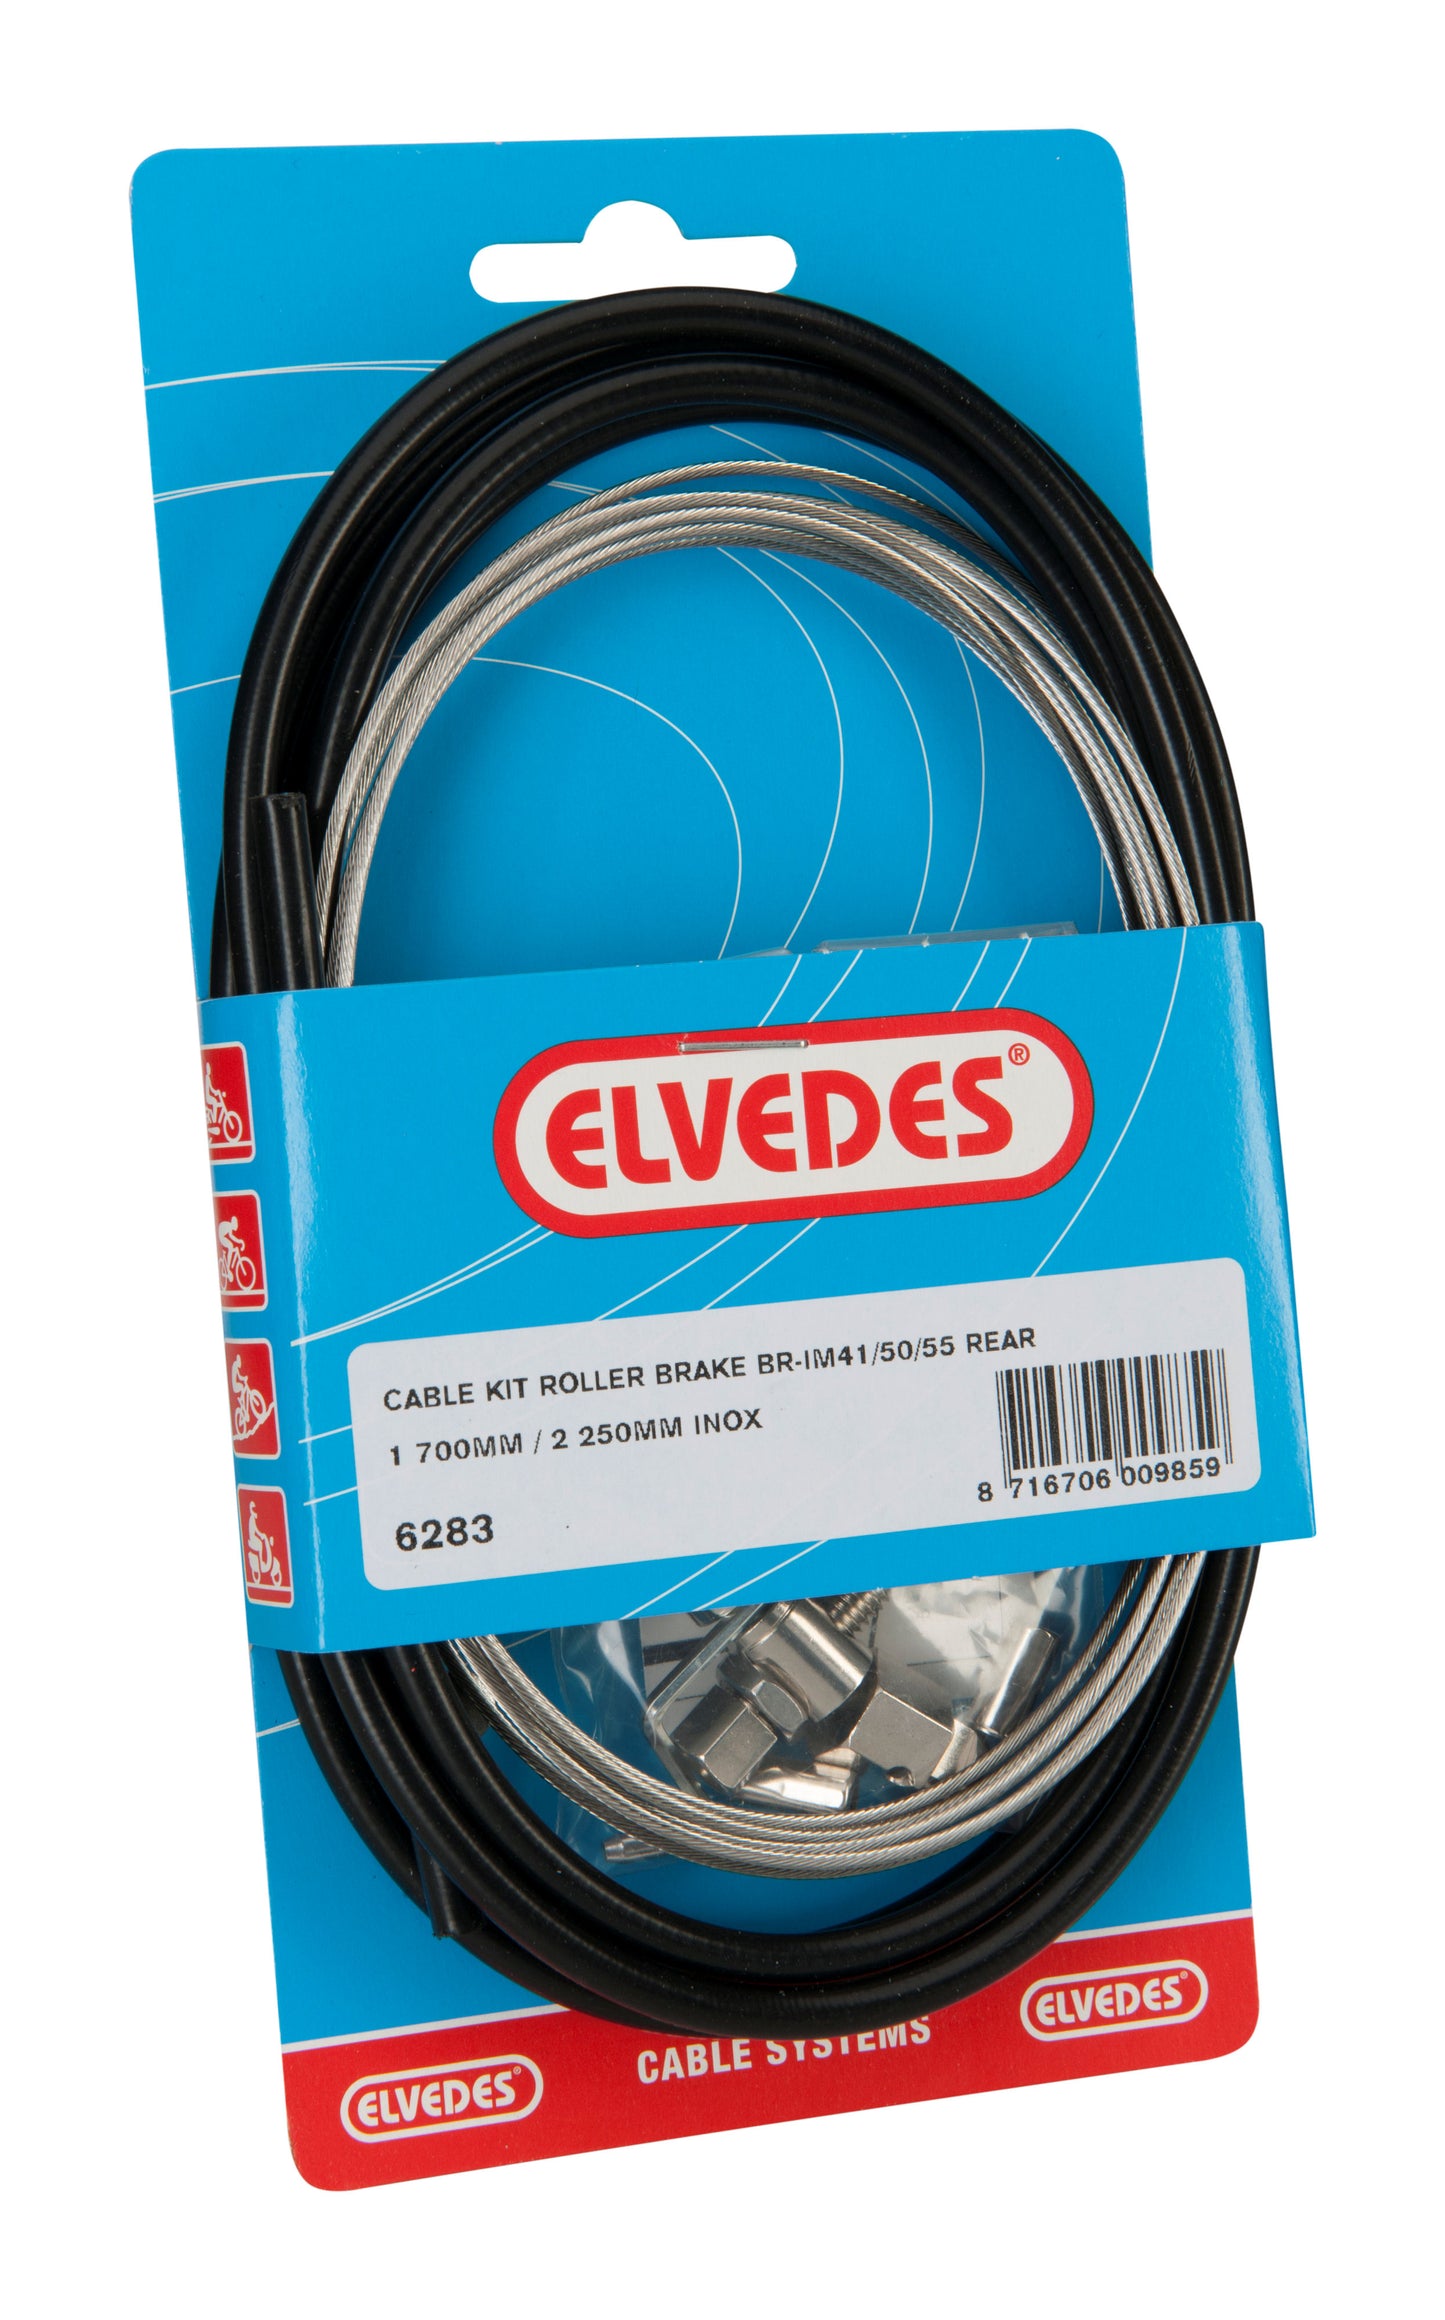 Rollerbrake kabelkit Elvedes BR-IM41 50 53 1700mm 2250mm RVS - zwart (op kaart)